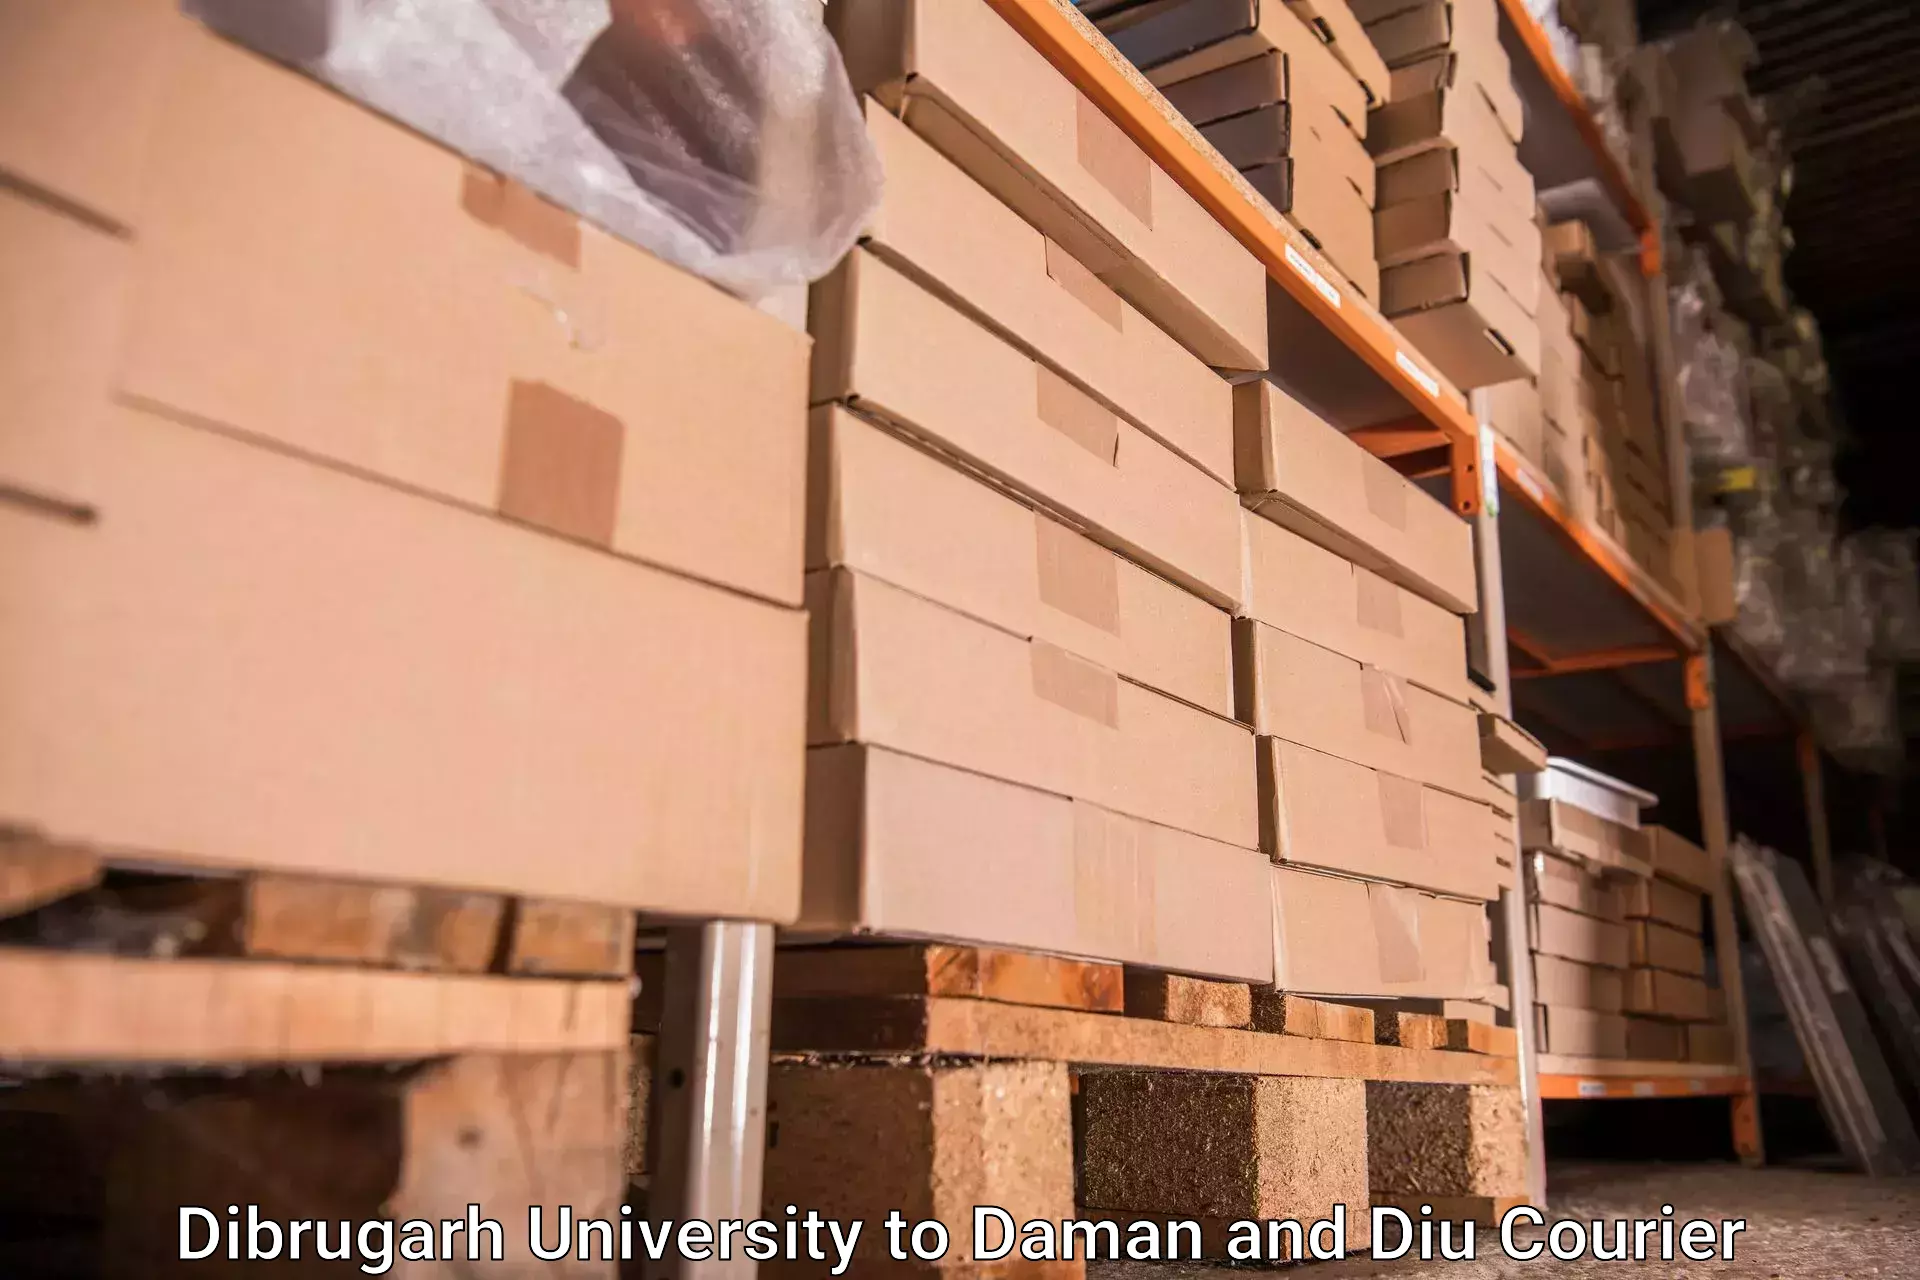 Baggage transport technology Dibrugarh University to Daman and Diu